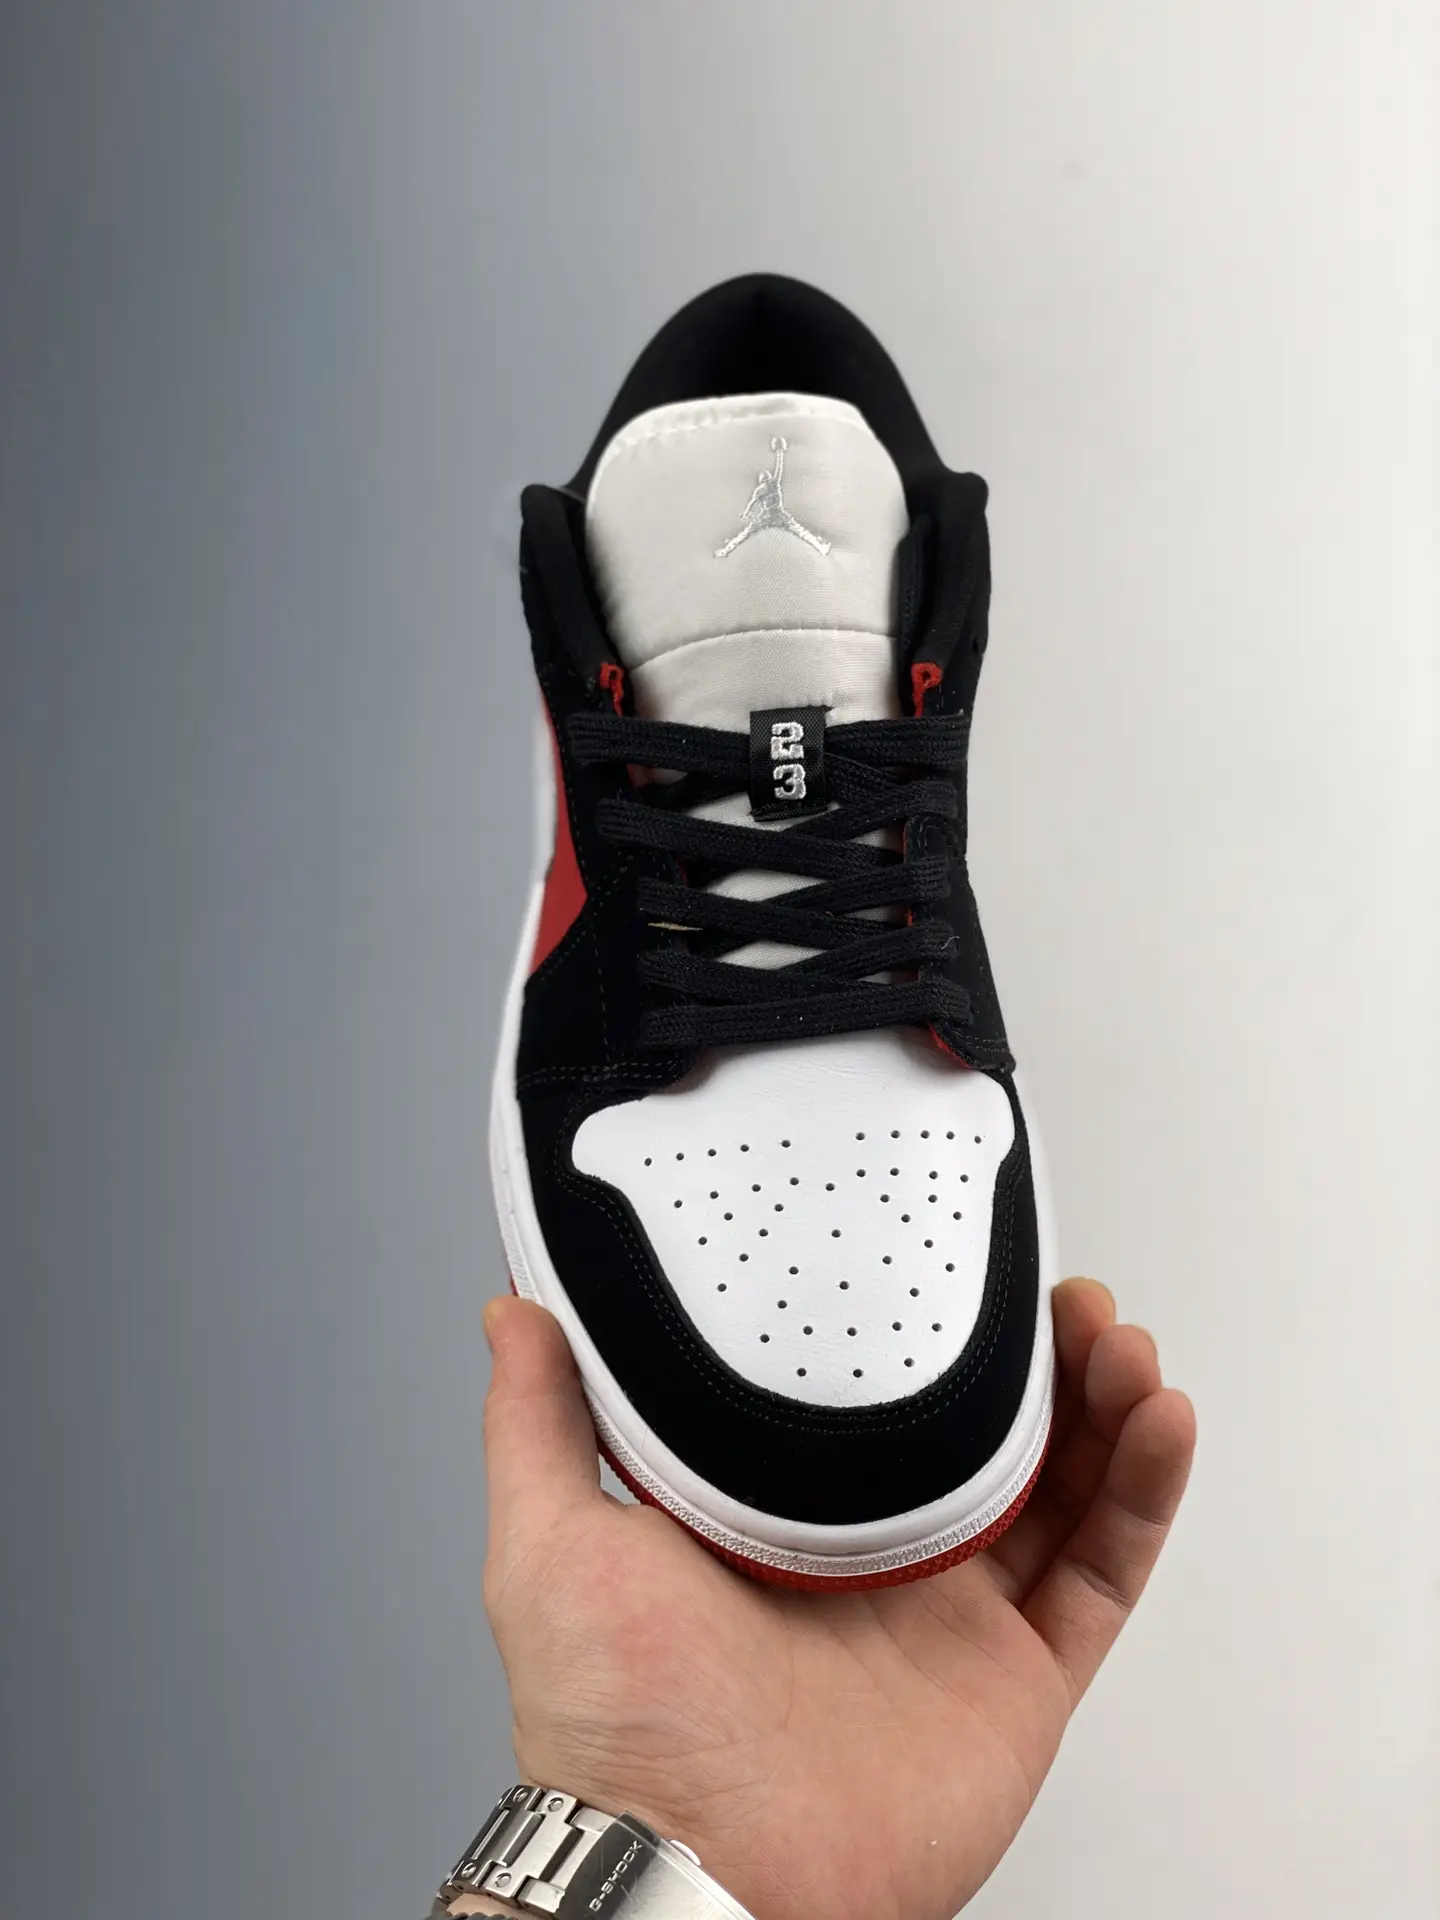 Wmns Air Jordan 1 Low 'Gym Red Black' Shoes Review | YtaYta